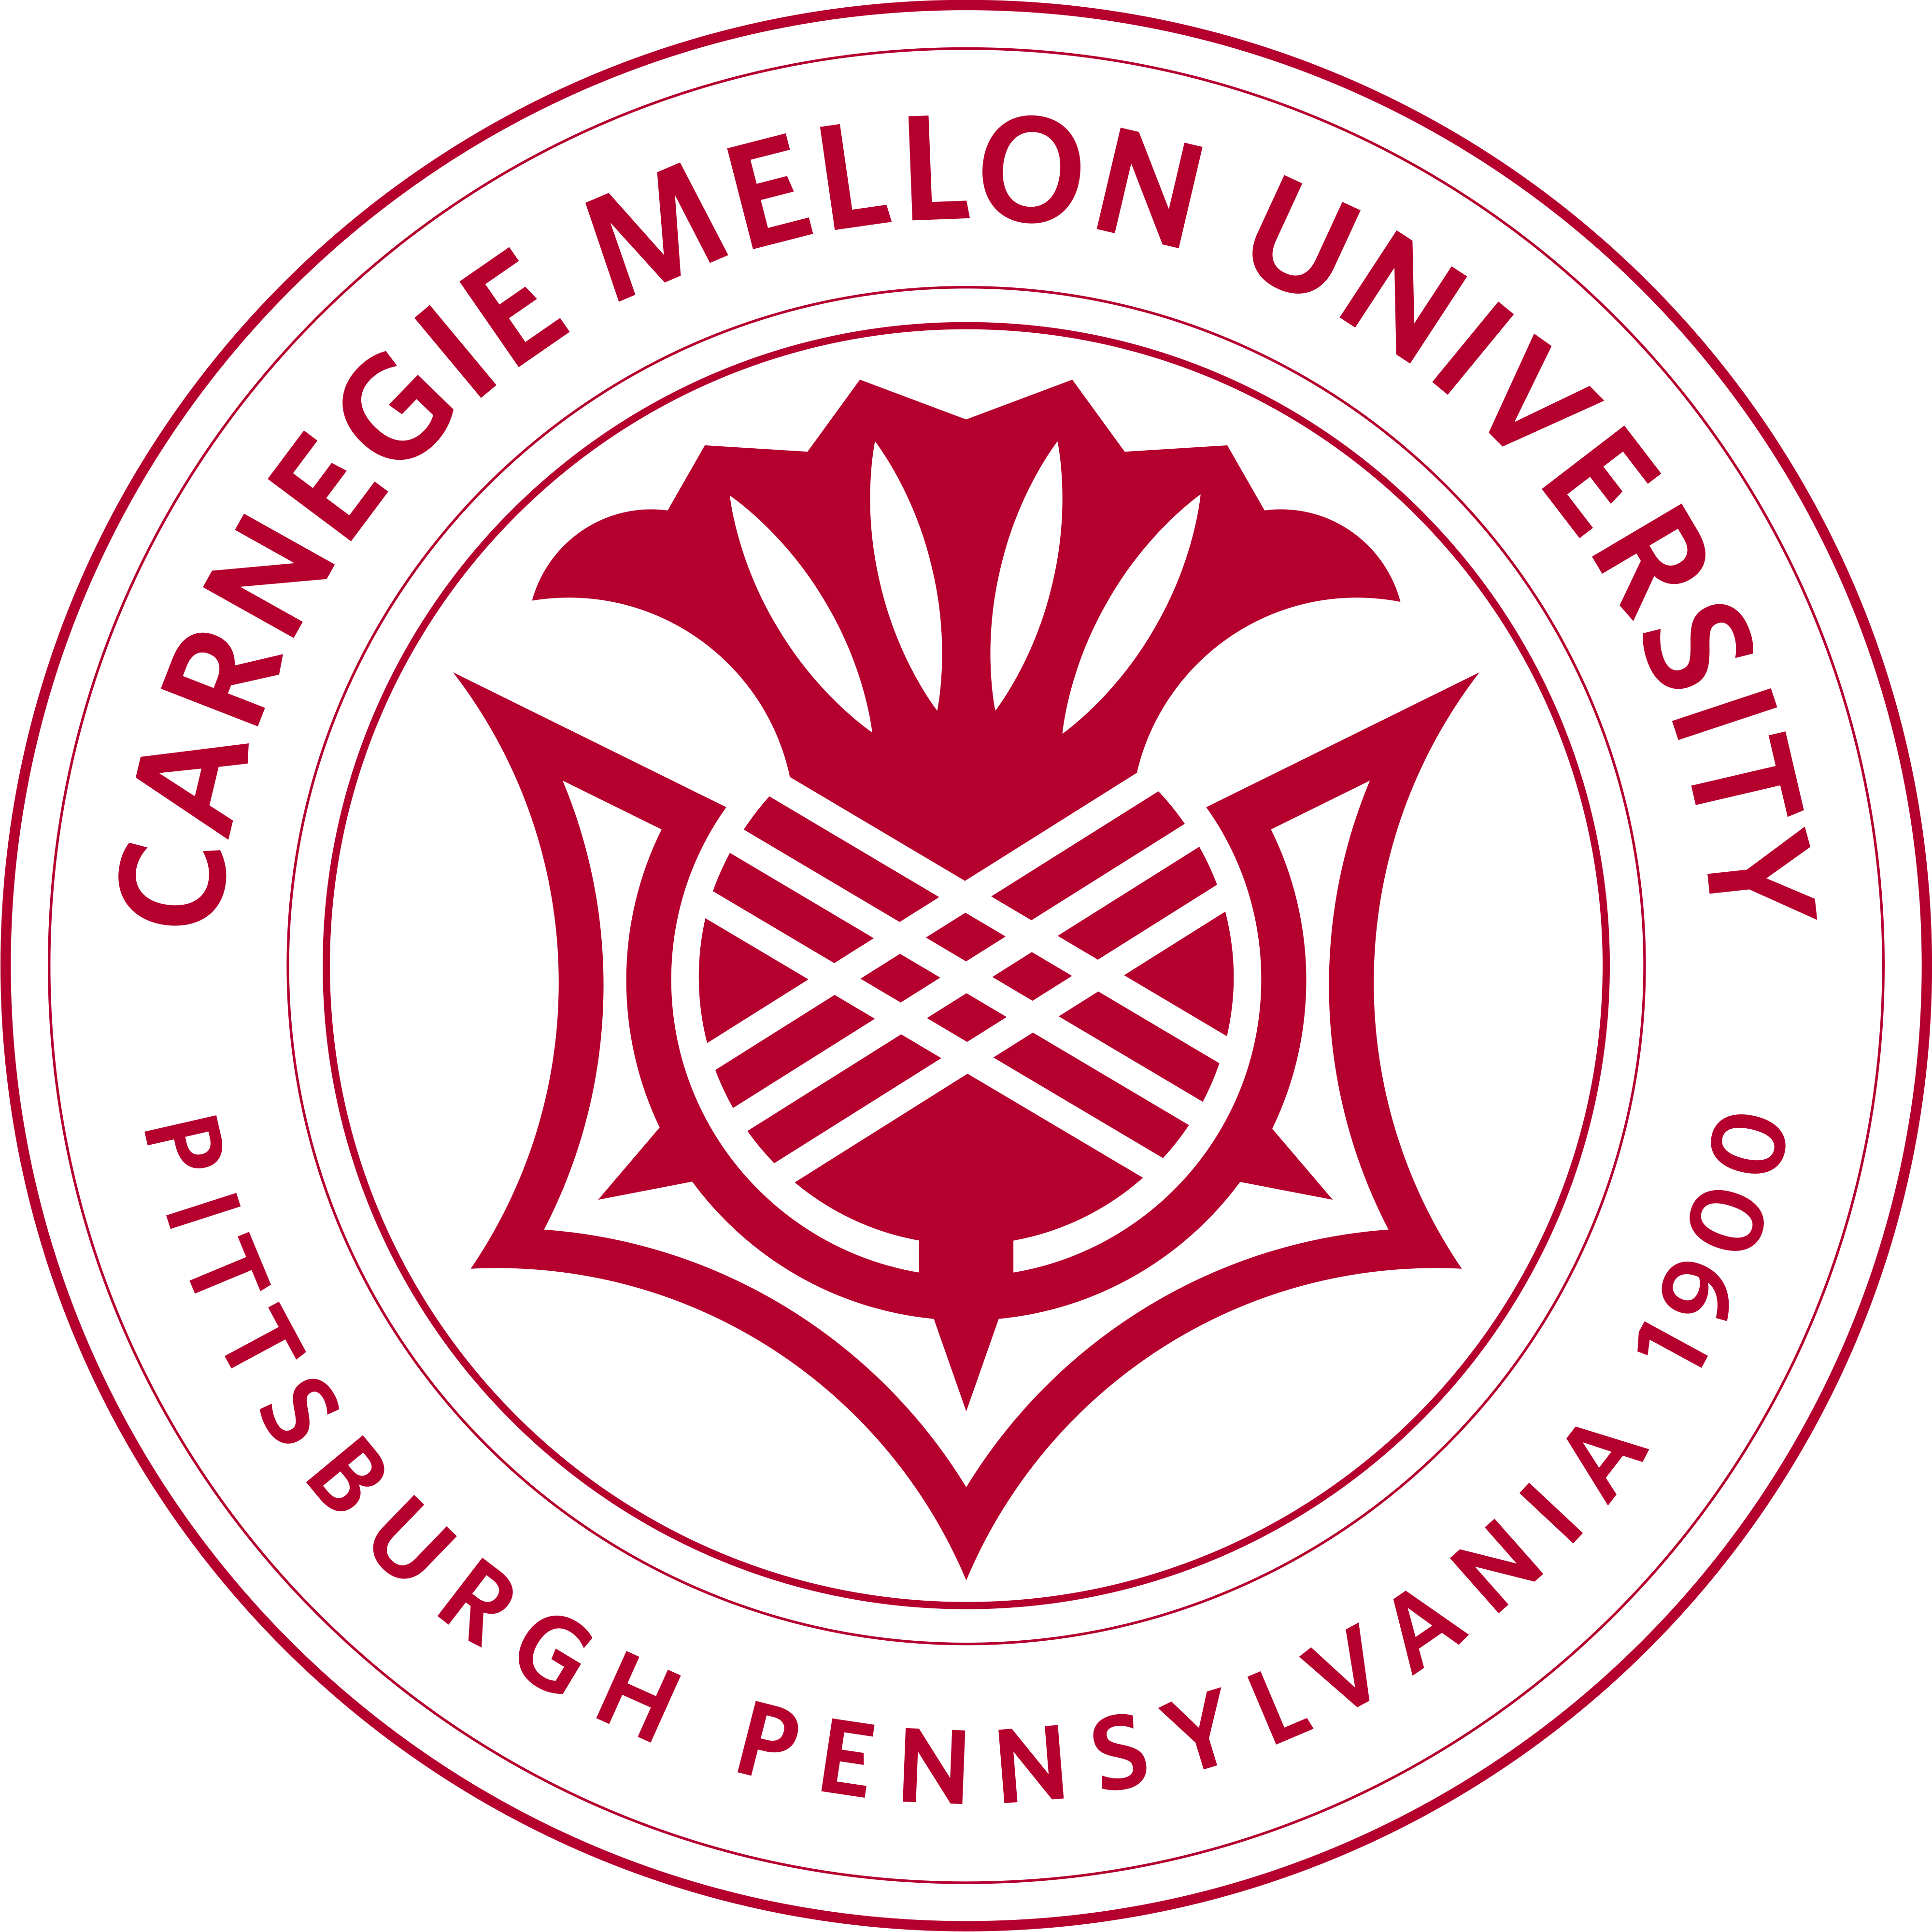 Carnegie Mellon University logo download.